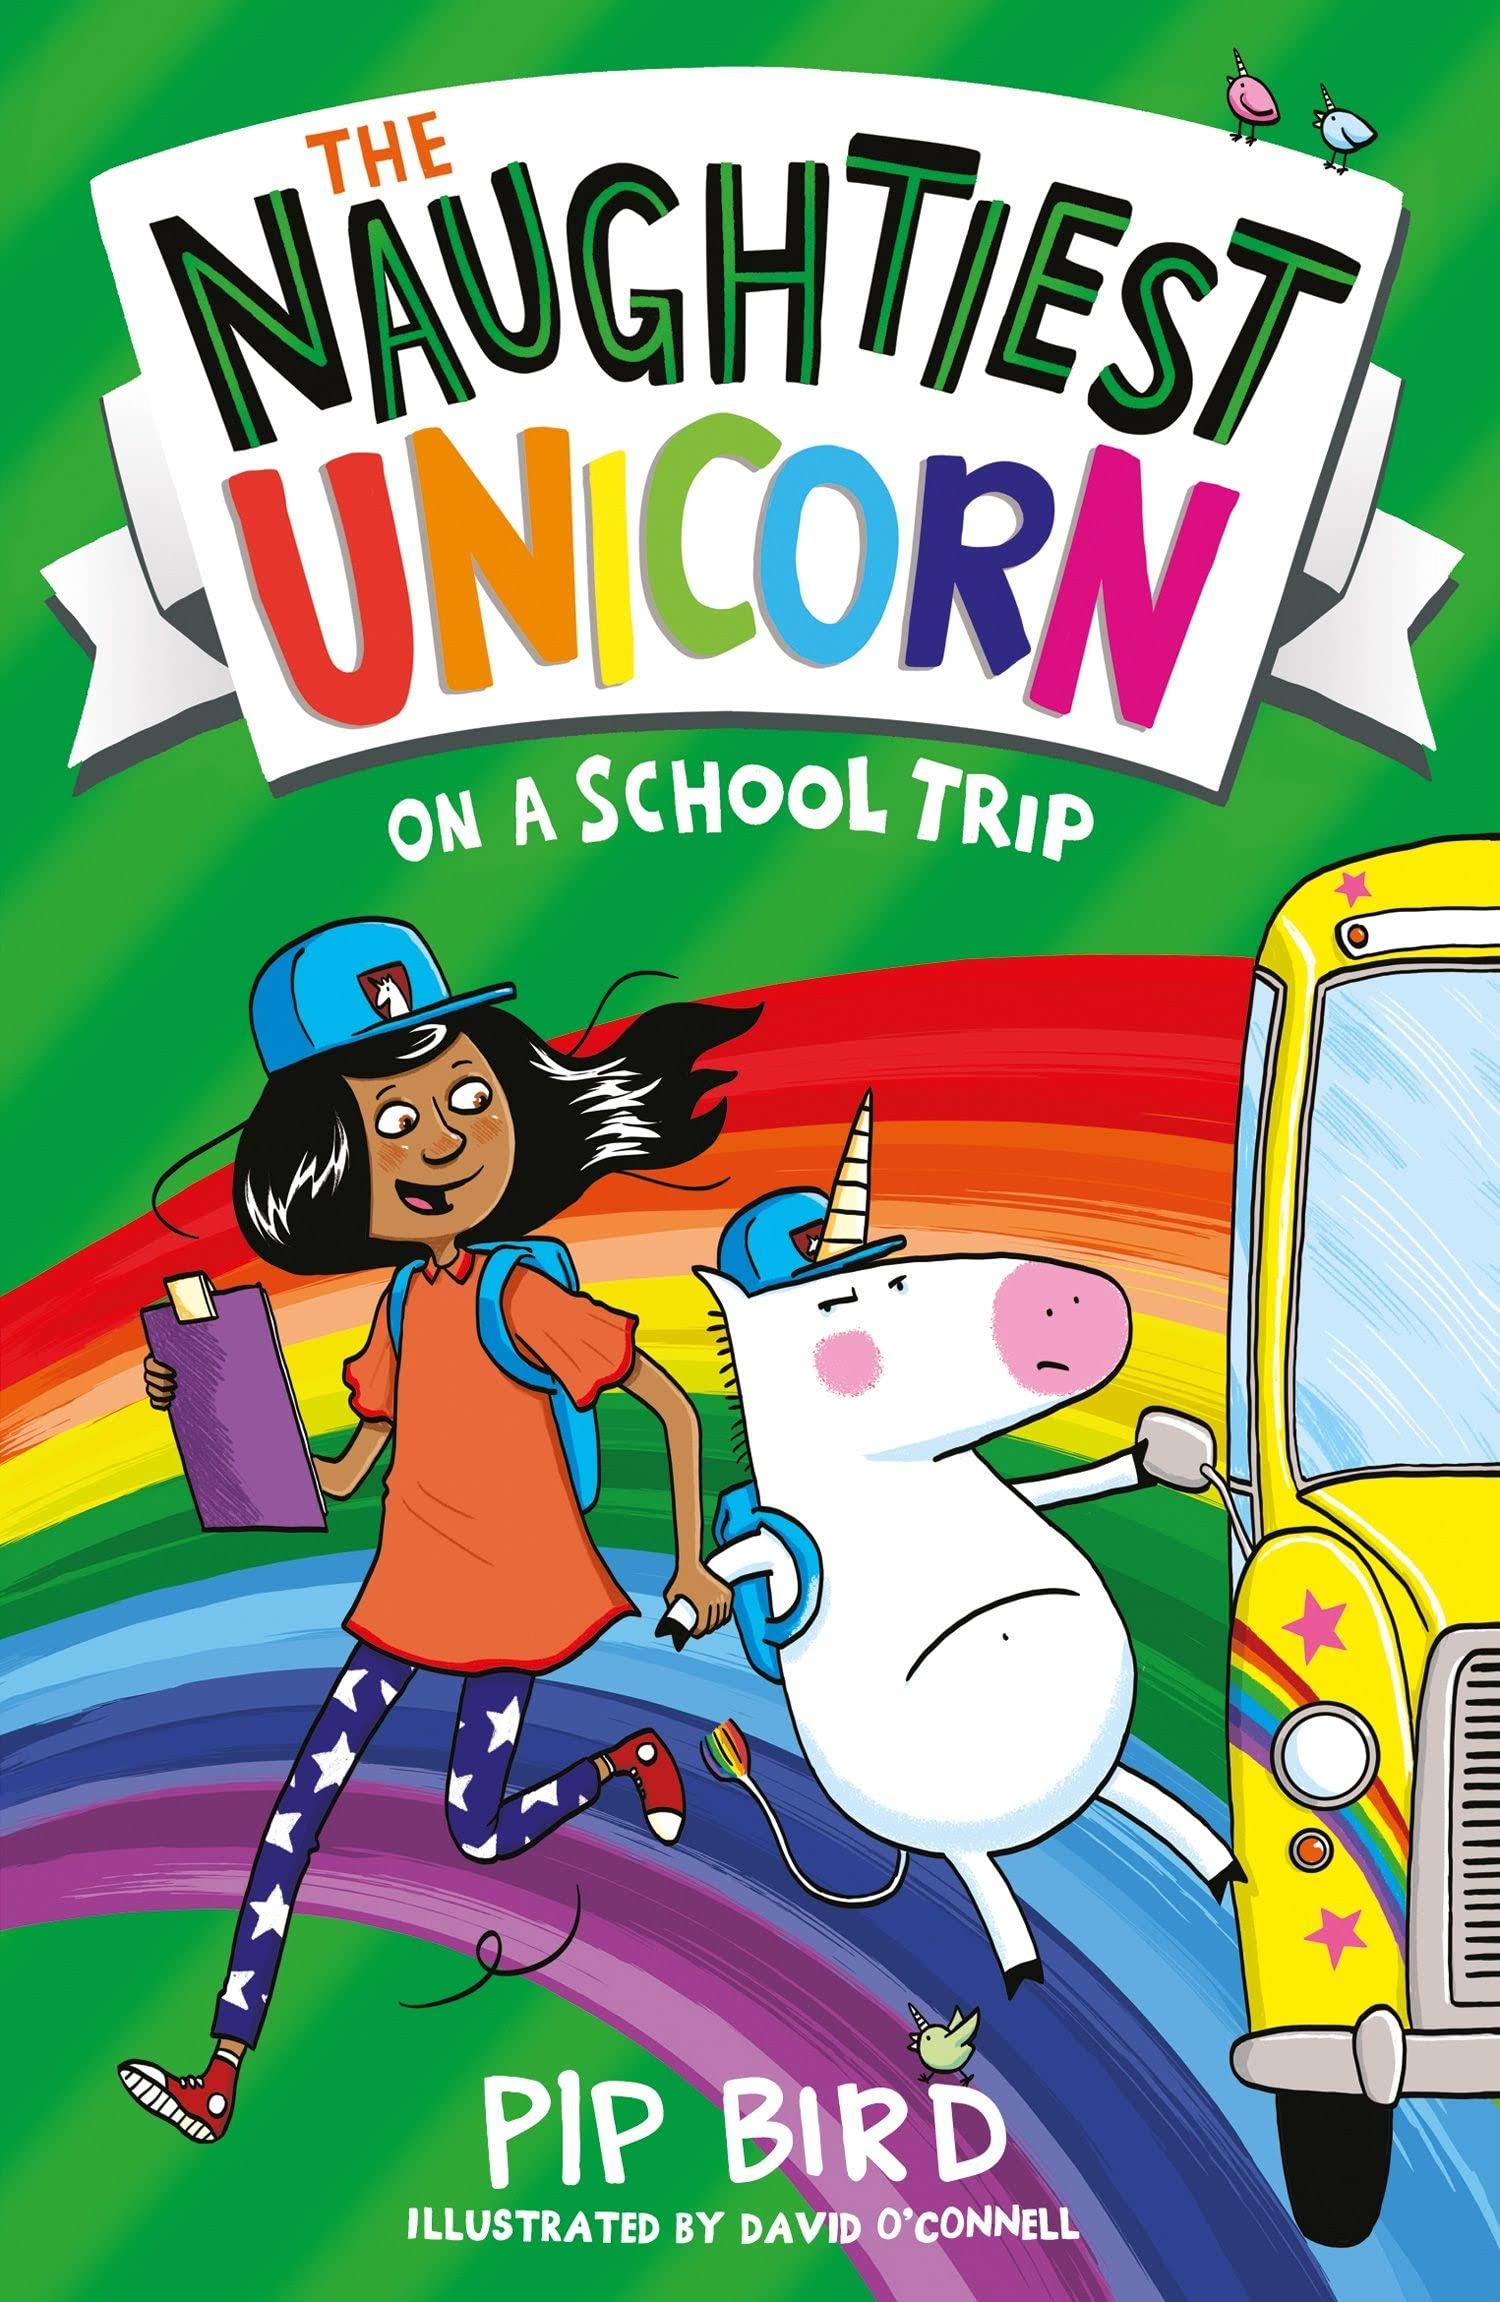 The Naughtiest Unicorn on a School Trip by Pip Bird